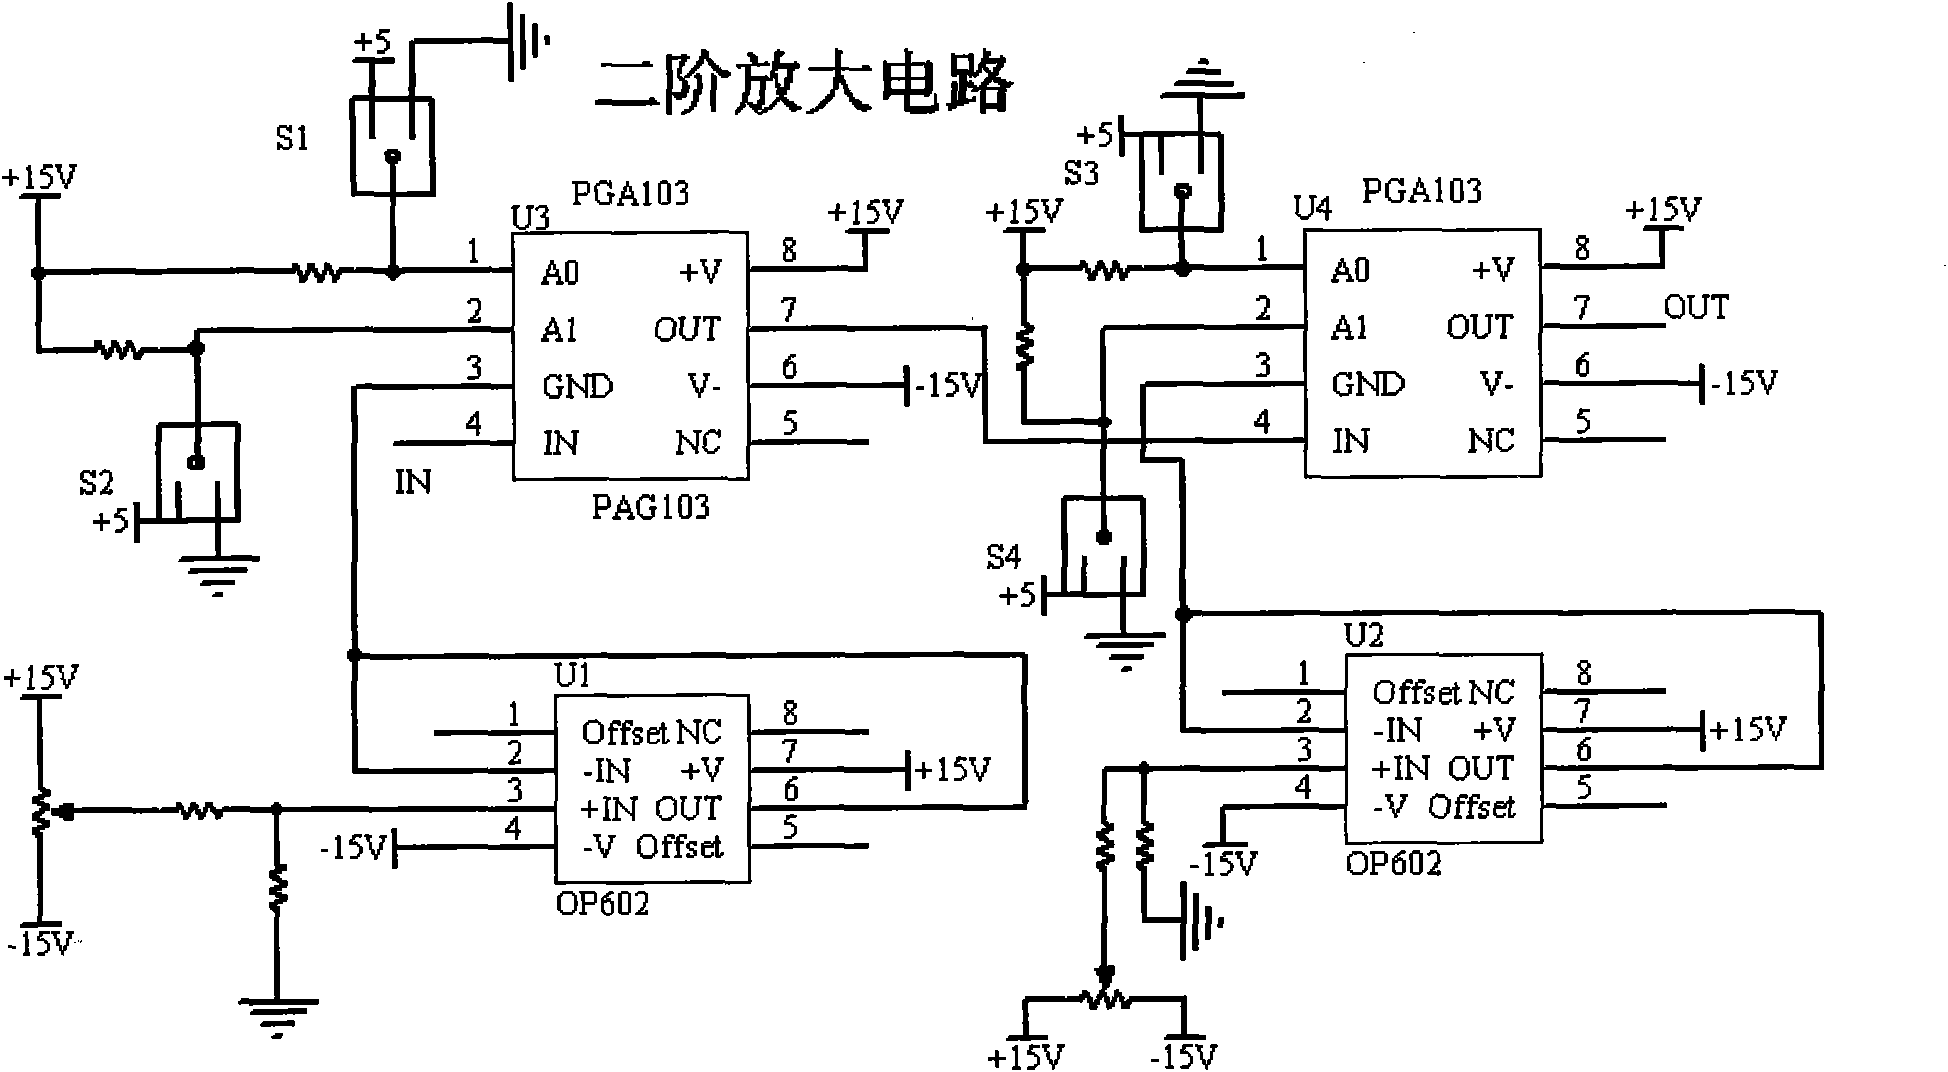 Lock-in amplifier circuit for detecting terahertz pulse signals